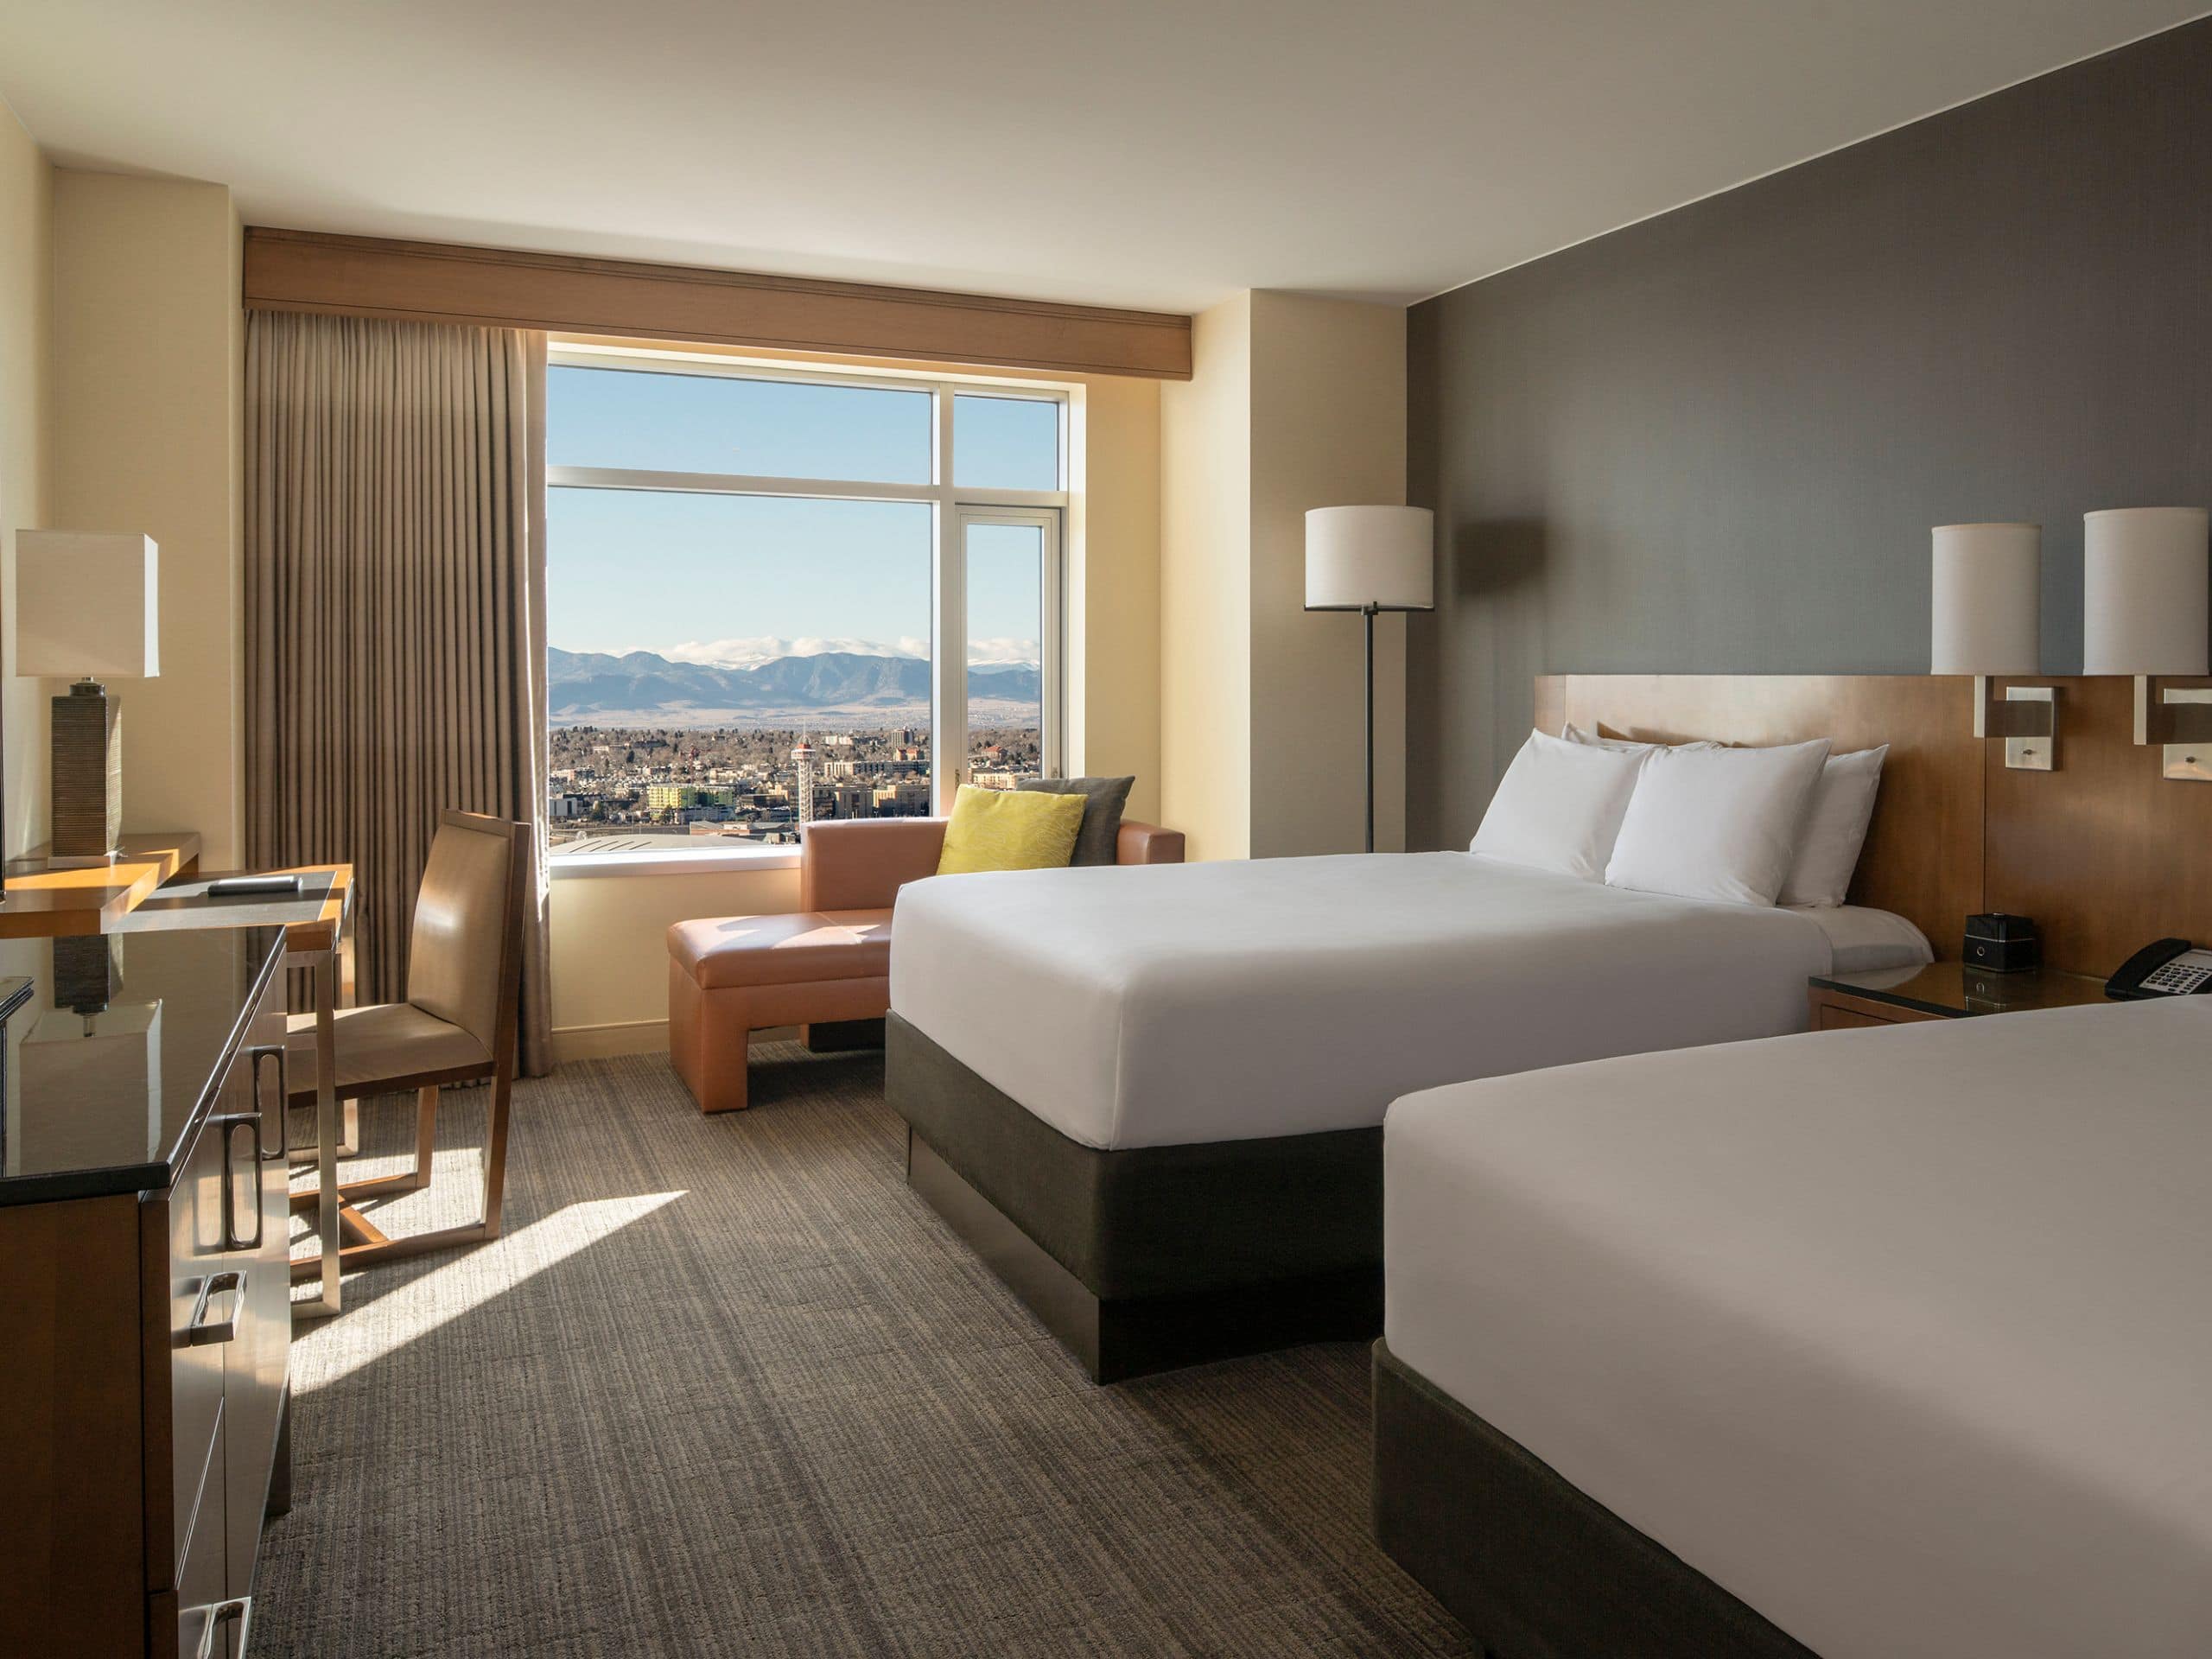 Downtown Denver hotel room with mountain view at Hyatt Regency Denver